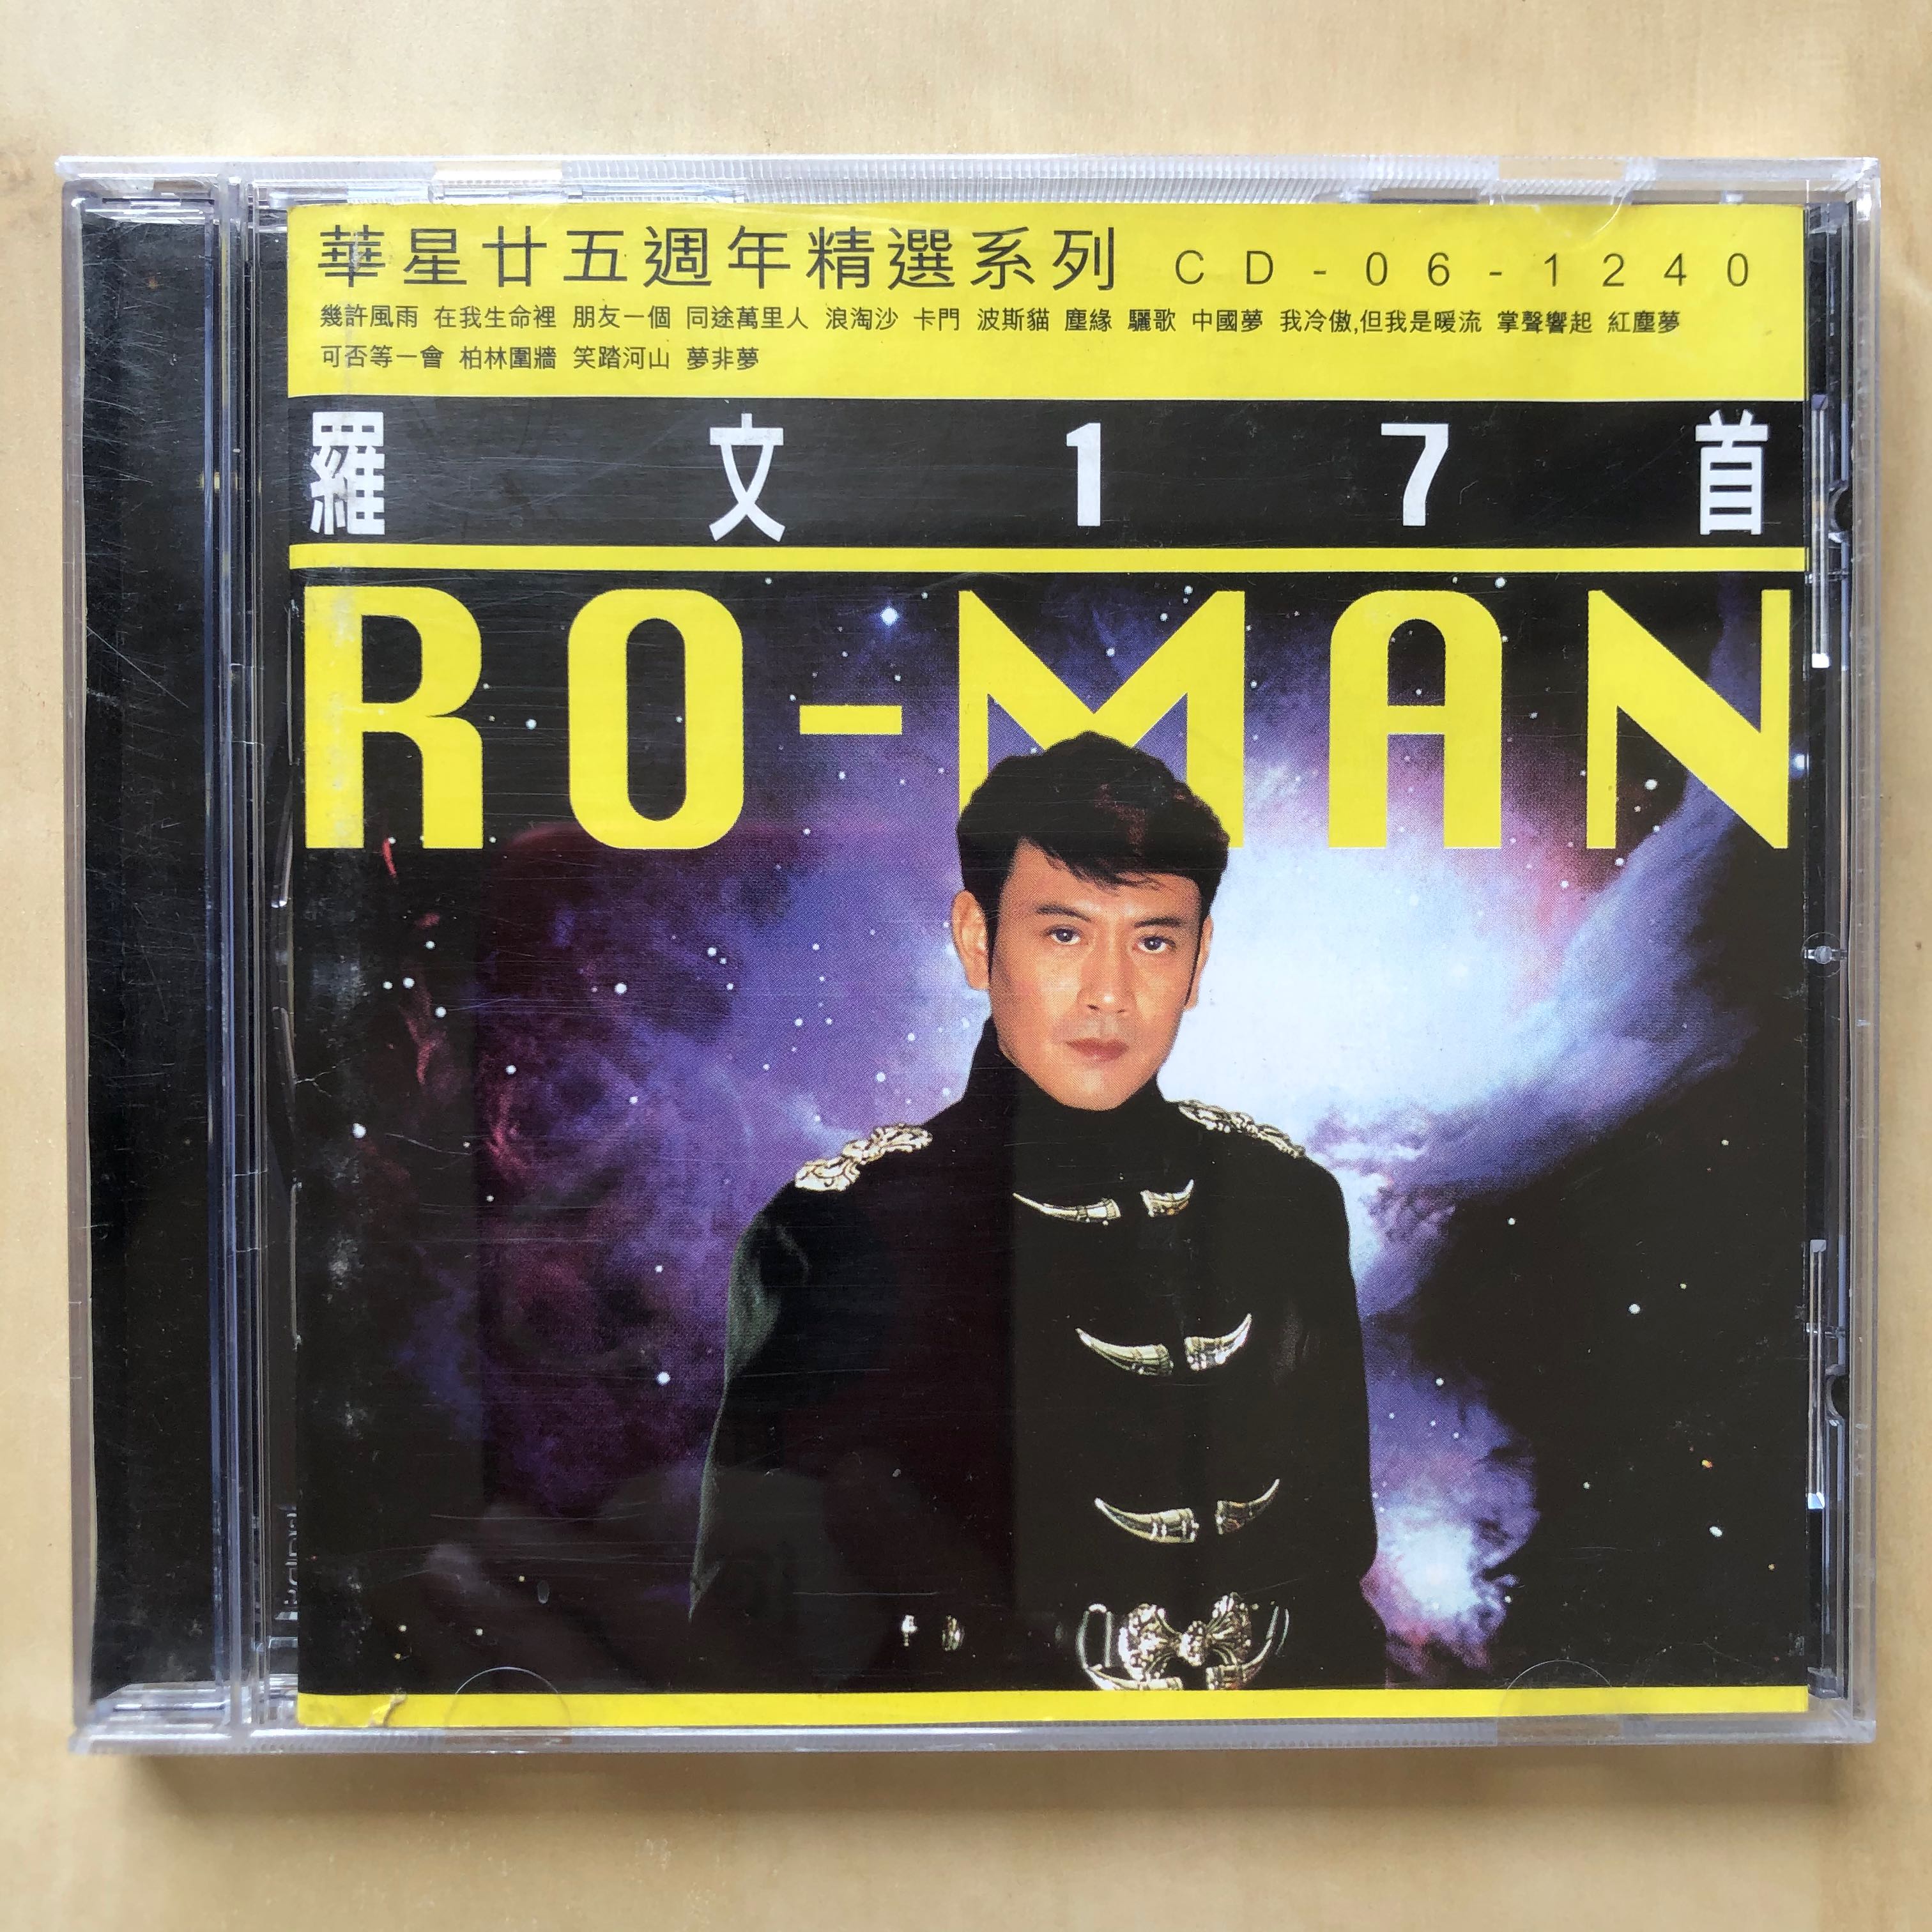 CD丨華星廿五週年精選系列羅文17首RO-MAN, 興趣及遊戲, 音樂、樂器 